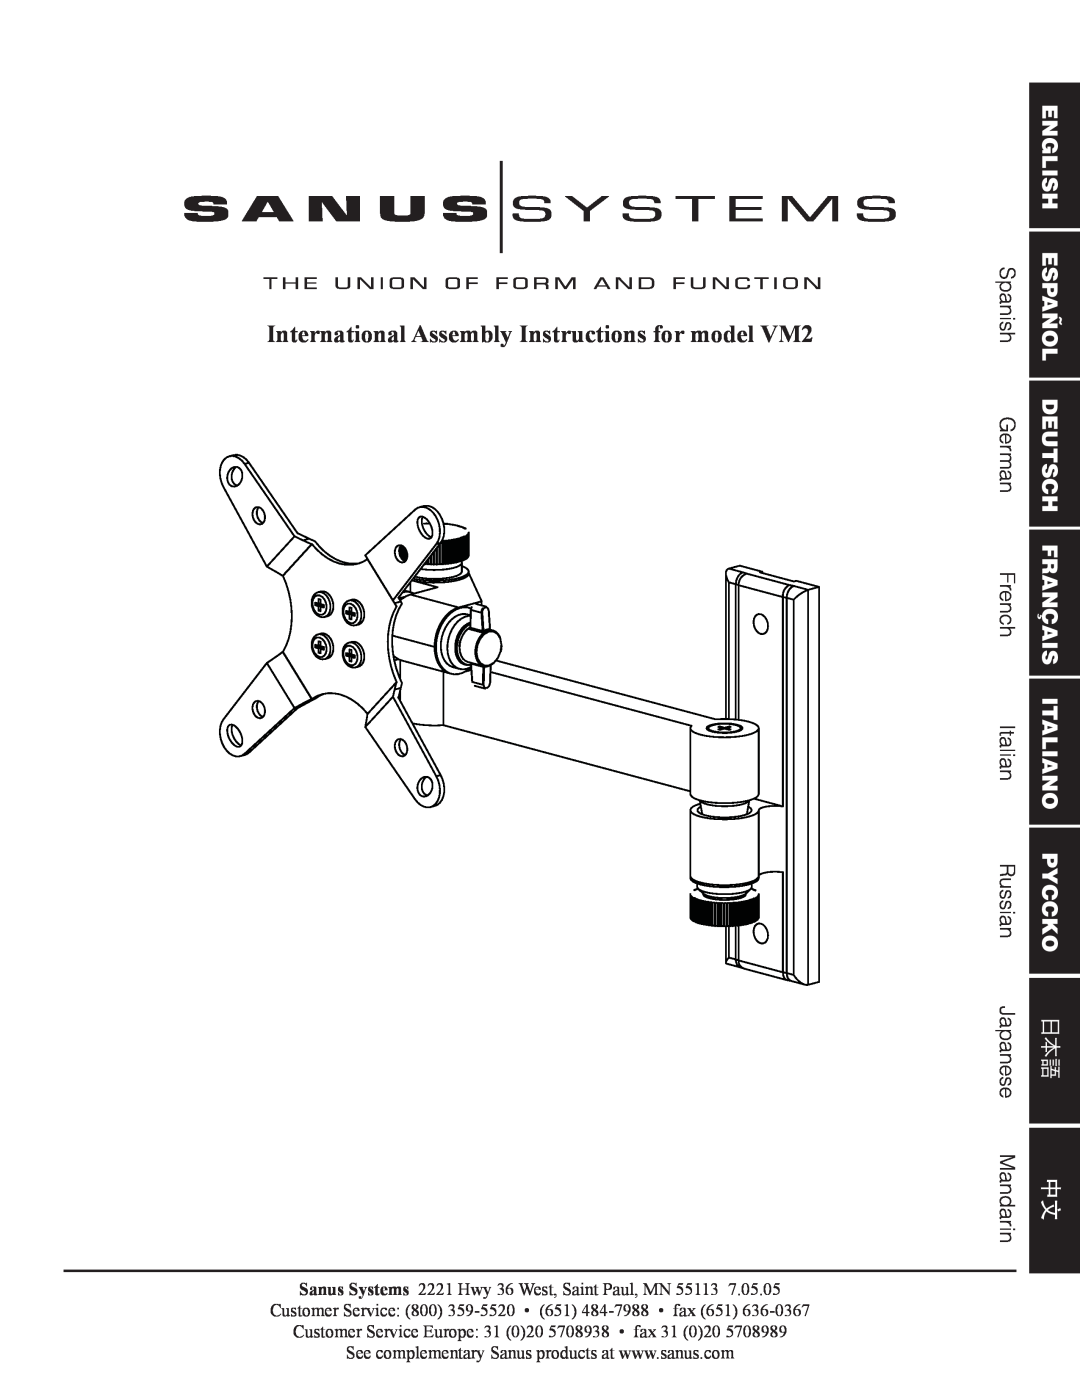 Sanus Systems VM2 manual English, Español, Deutsch, Français, Italiano, Pyccko, Spanish, German, French, Russian, Japanese 